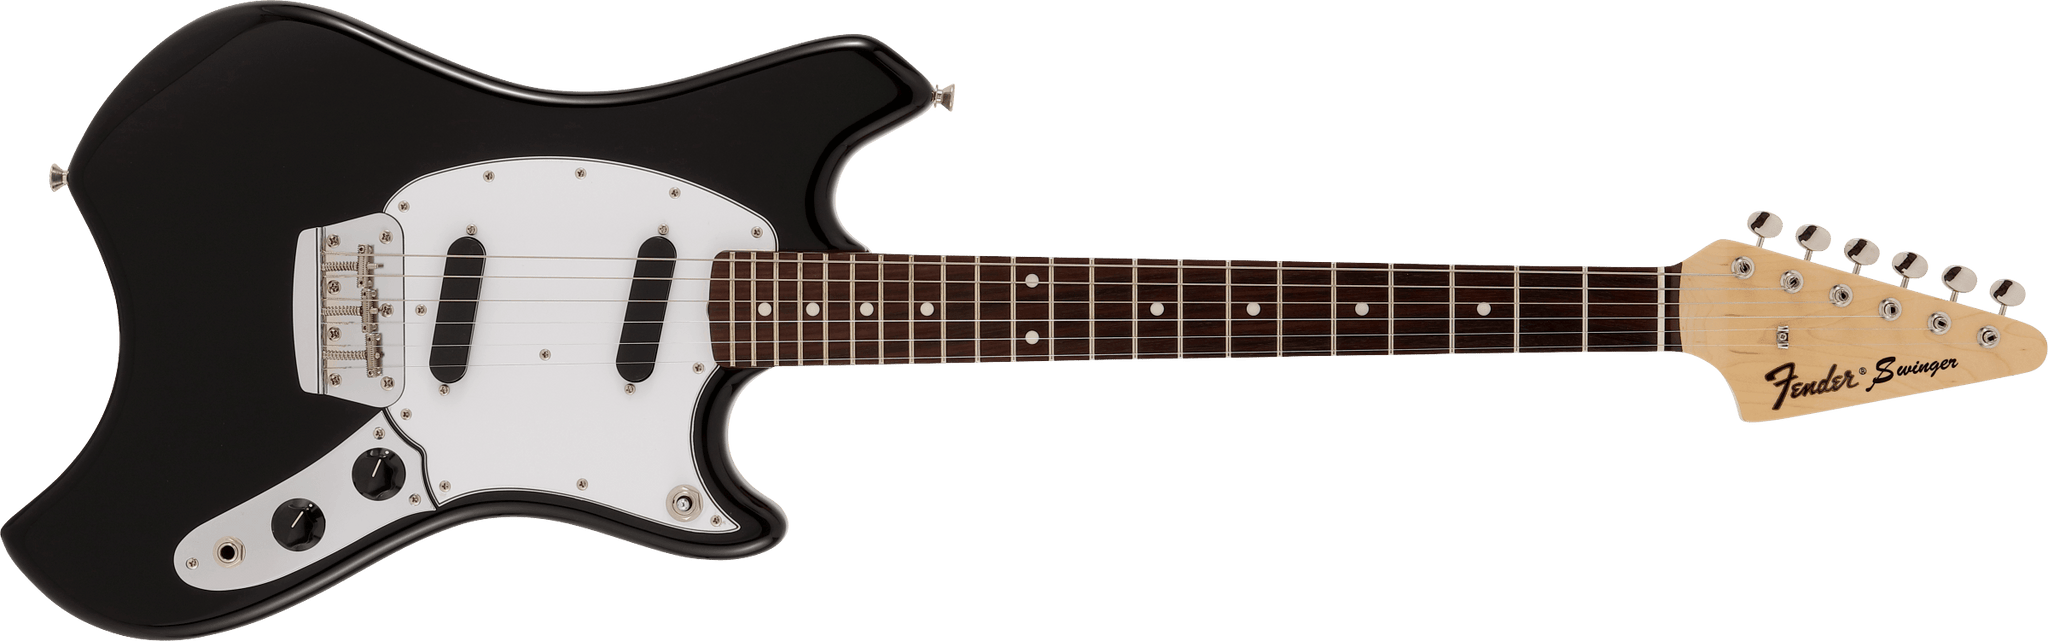 Fender Limited Swinger - Black – Found Sound